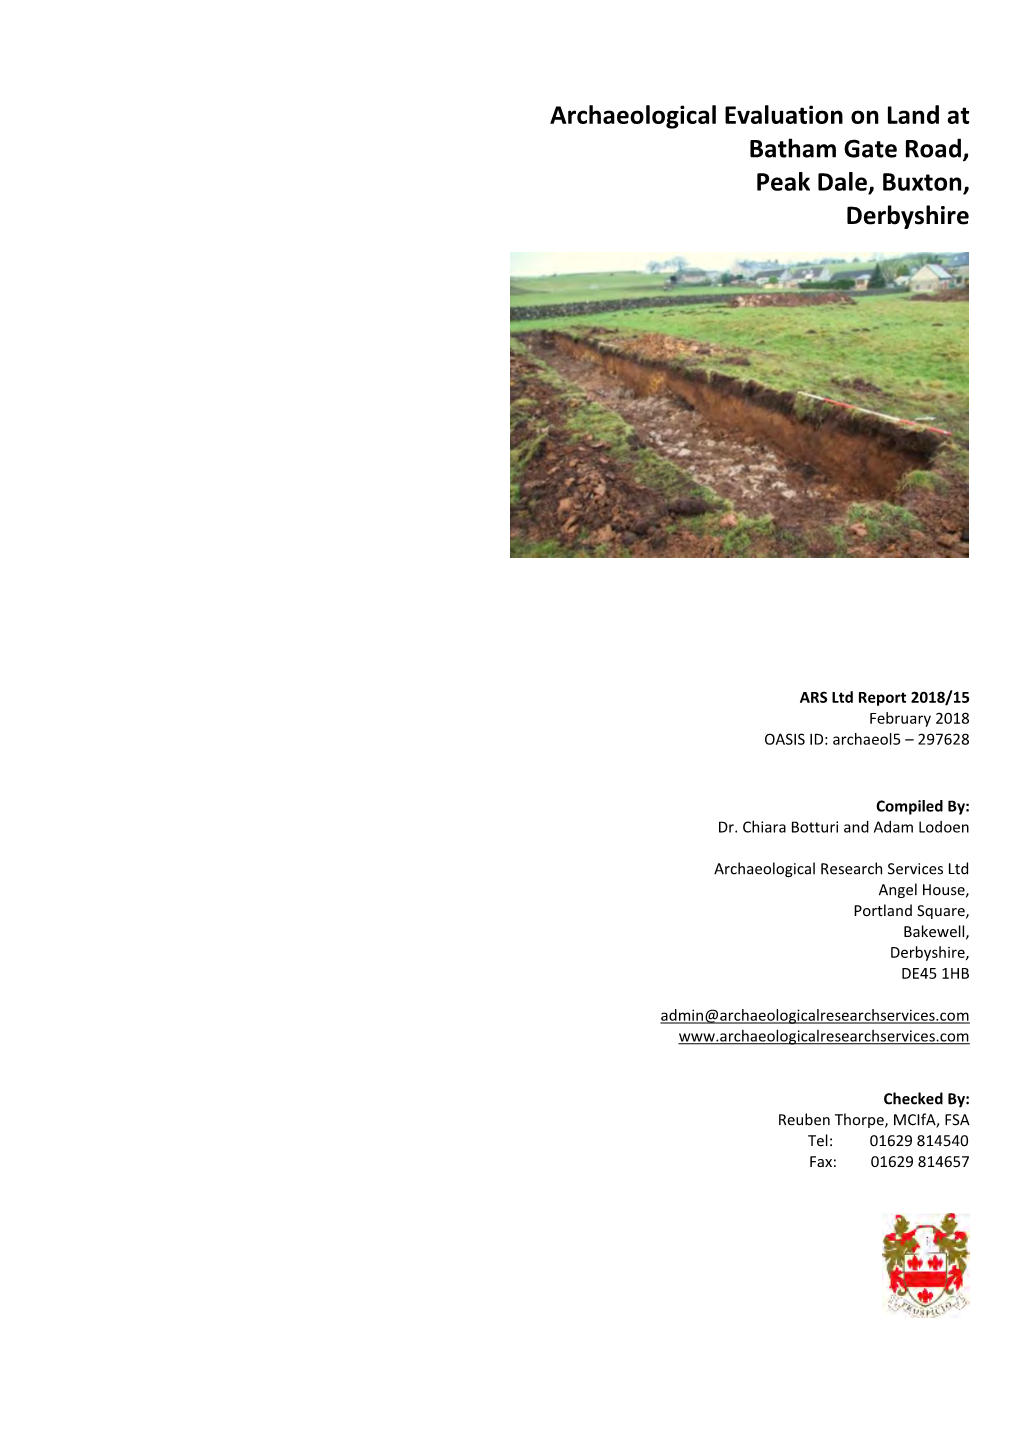 Archaeological Evaluation on Land at Batham Gate Road, Peak Dale, Buxton, Derbyshire